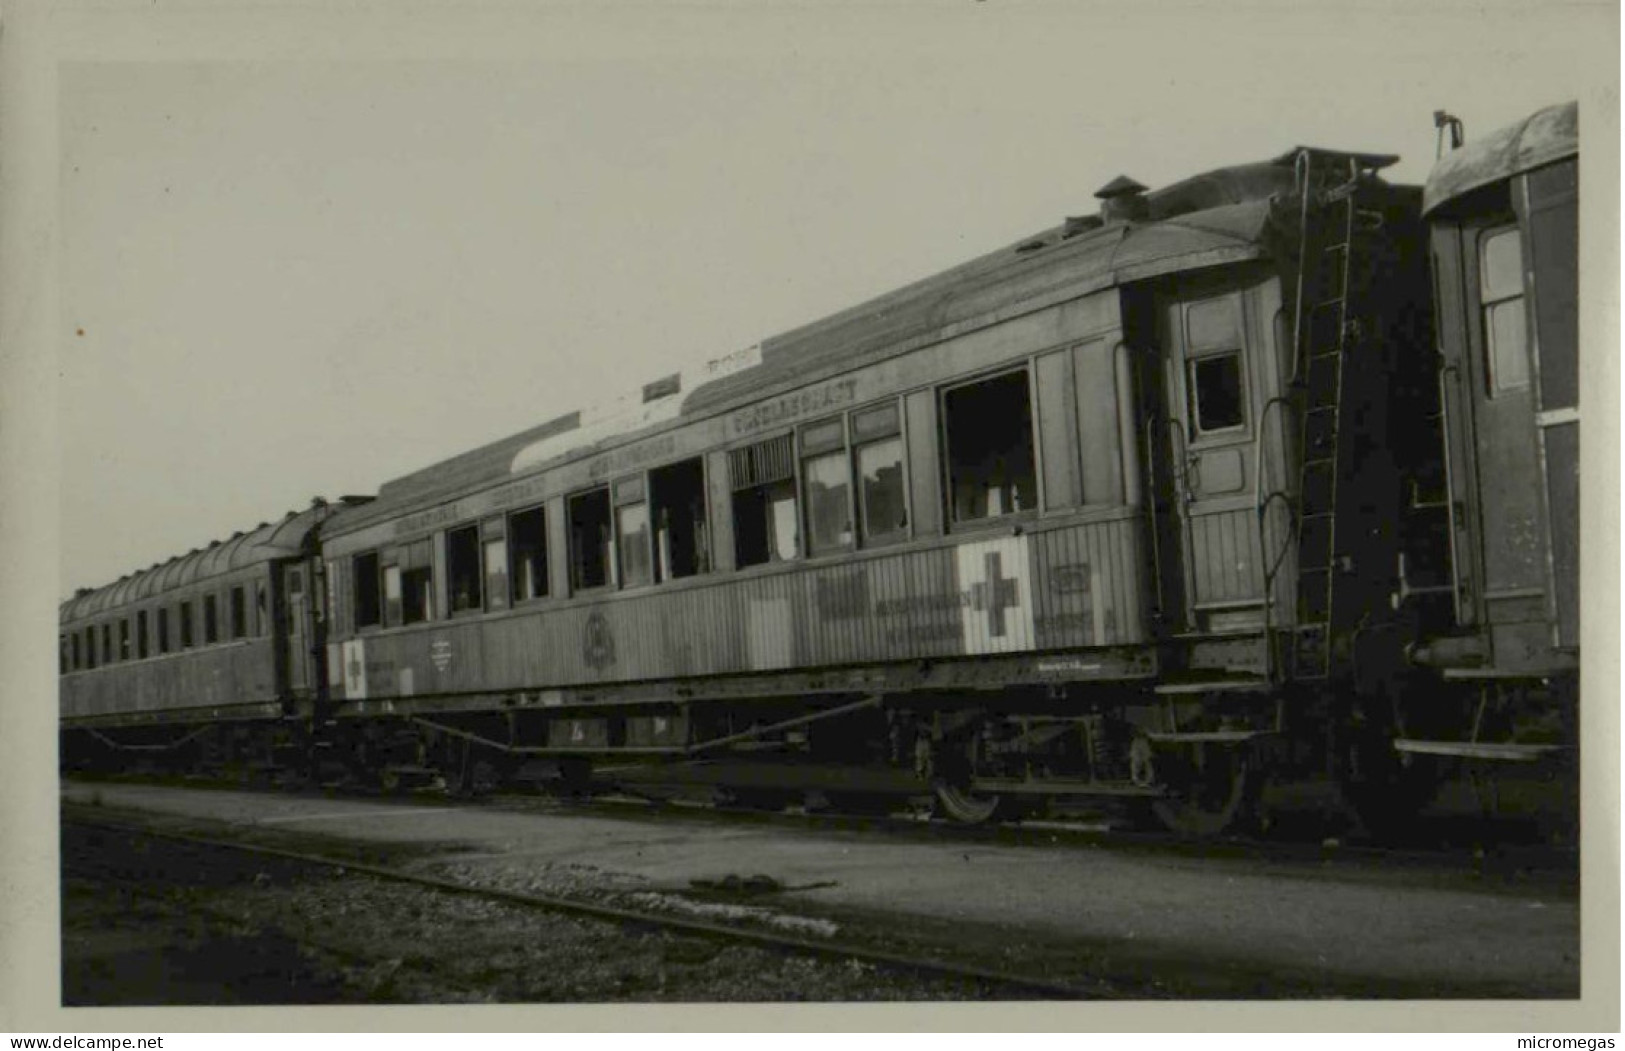 Reproduction -  Wagon-lit 1962 - Eisenbahnen